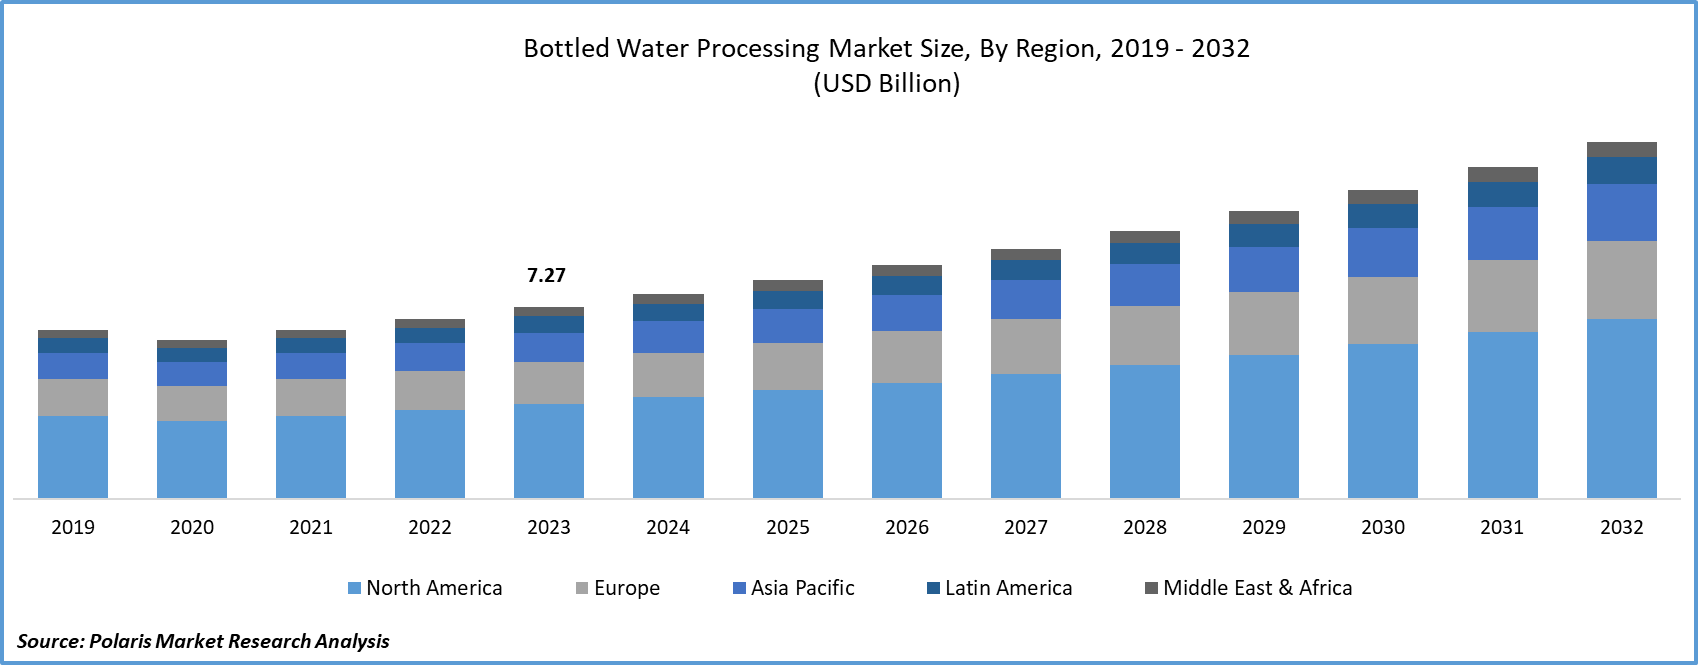 Bottled Water Processing Market Size